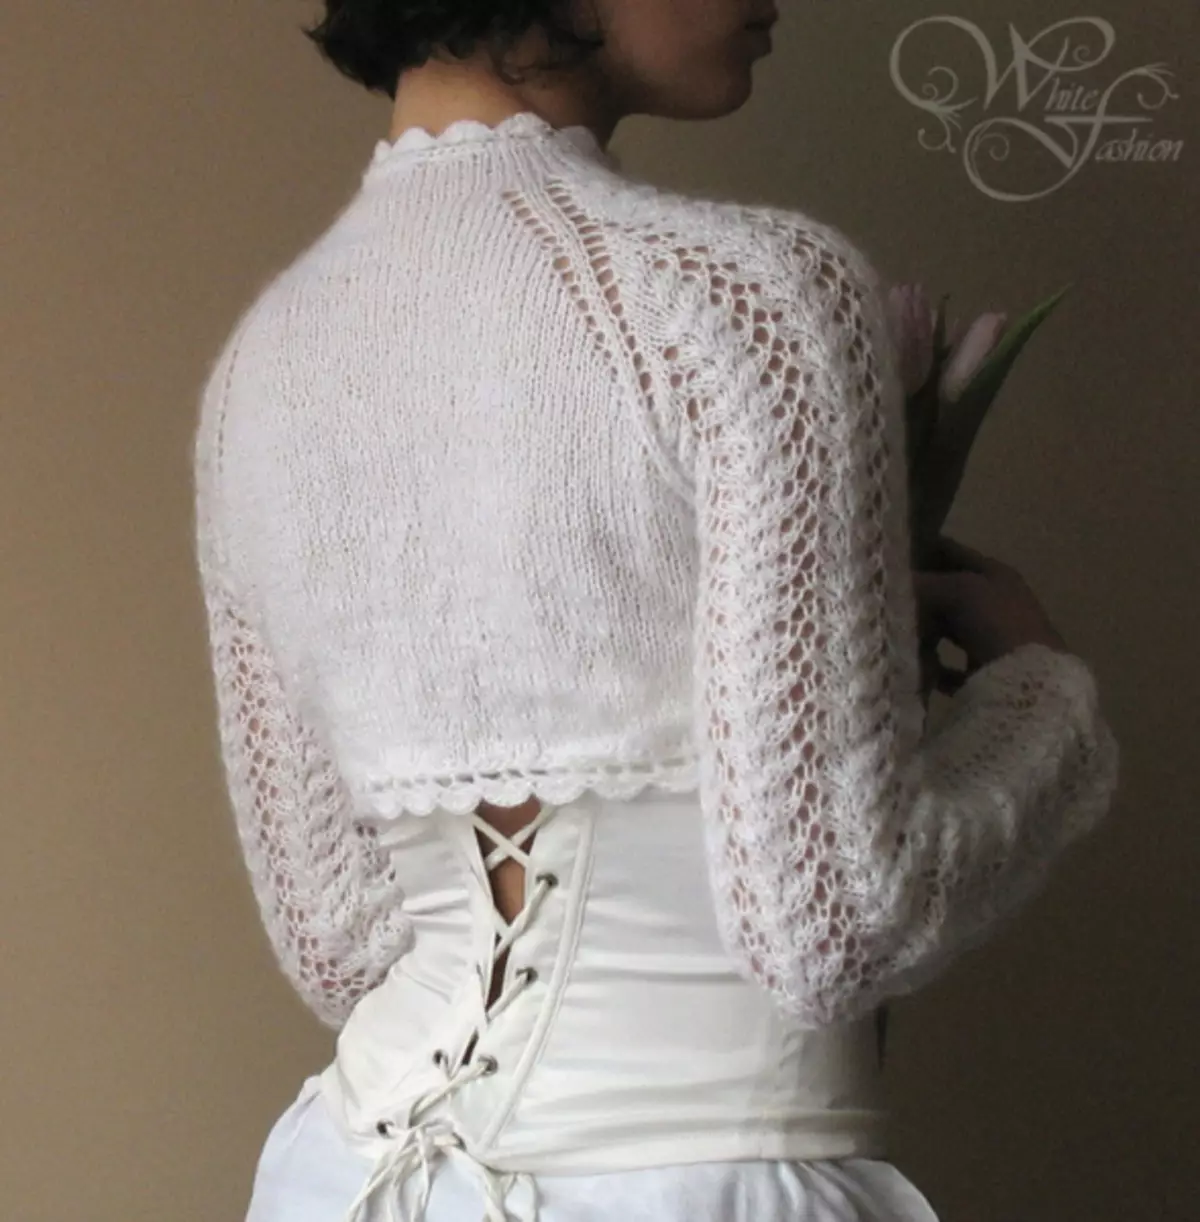 Crochet Cape עם ערכות ותיאור על הכתפיים: כיתה מאסטר עם תמונות ווידאו